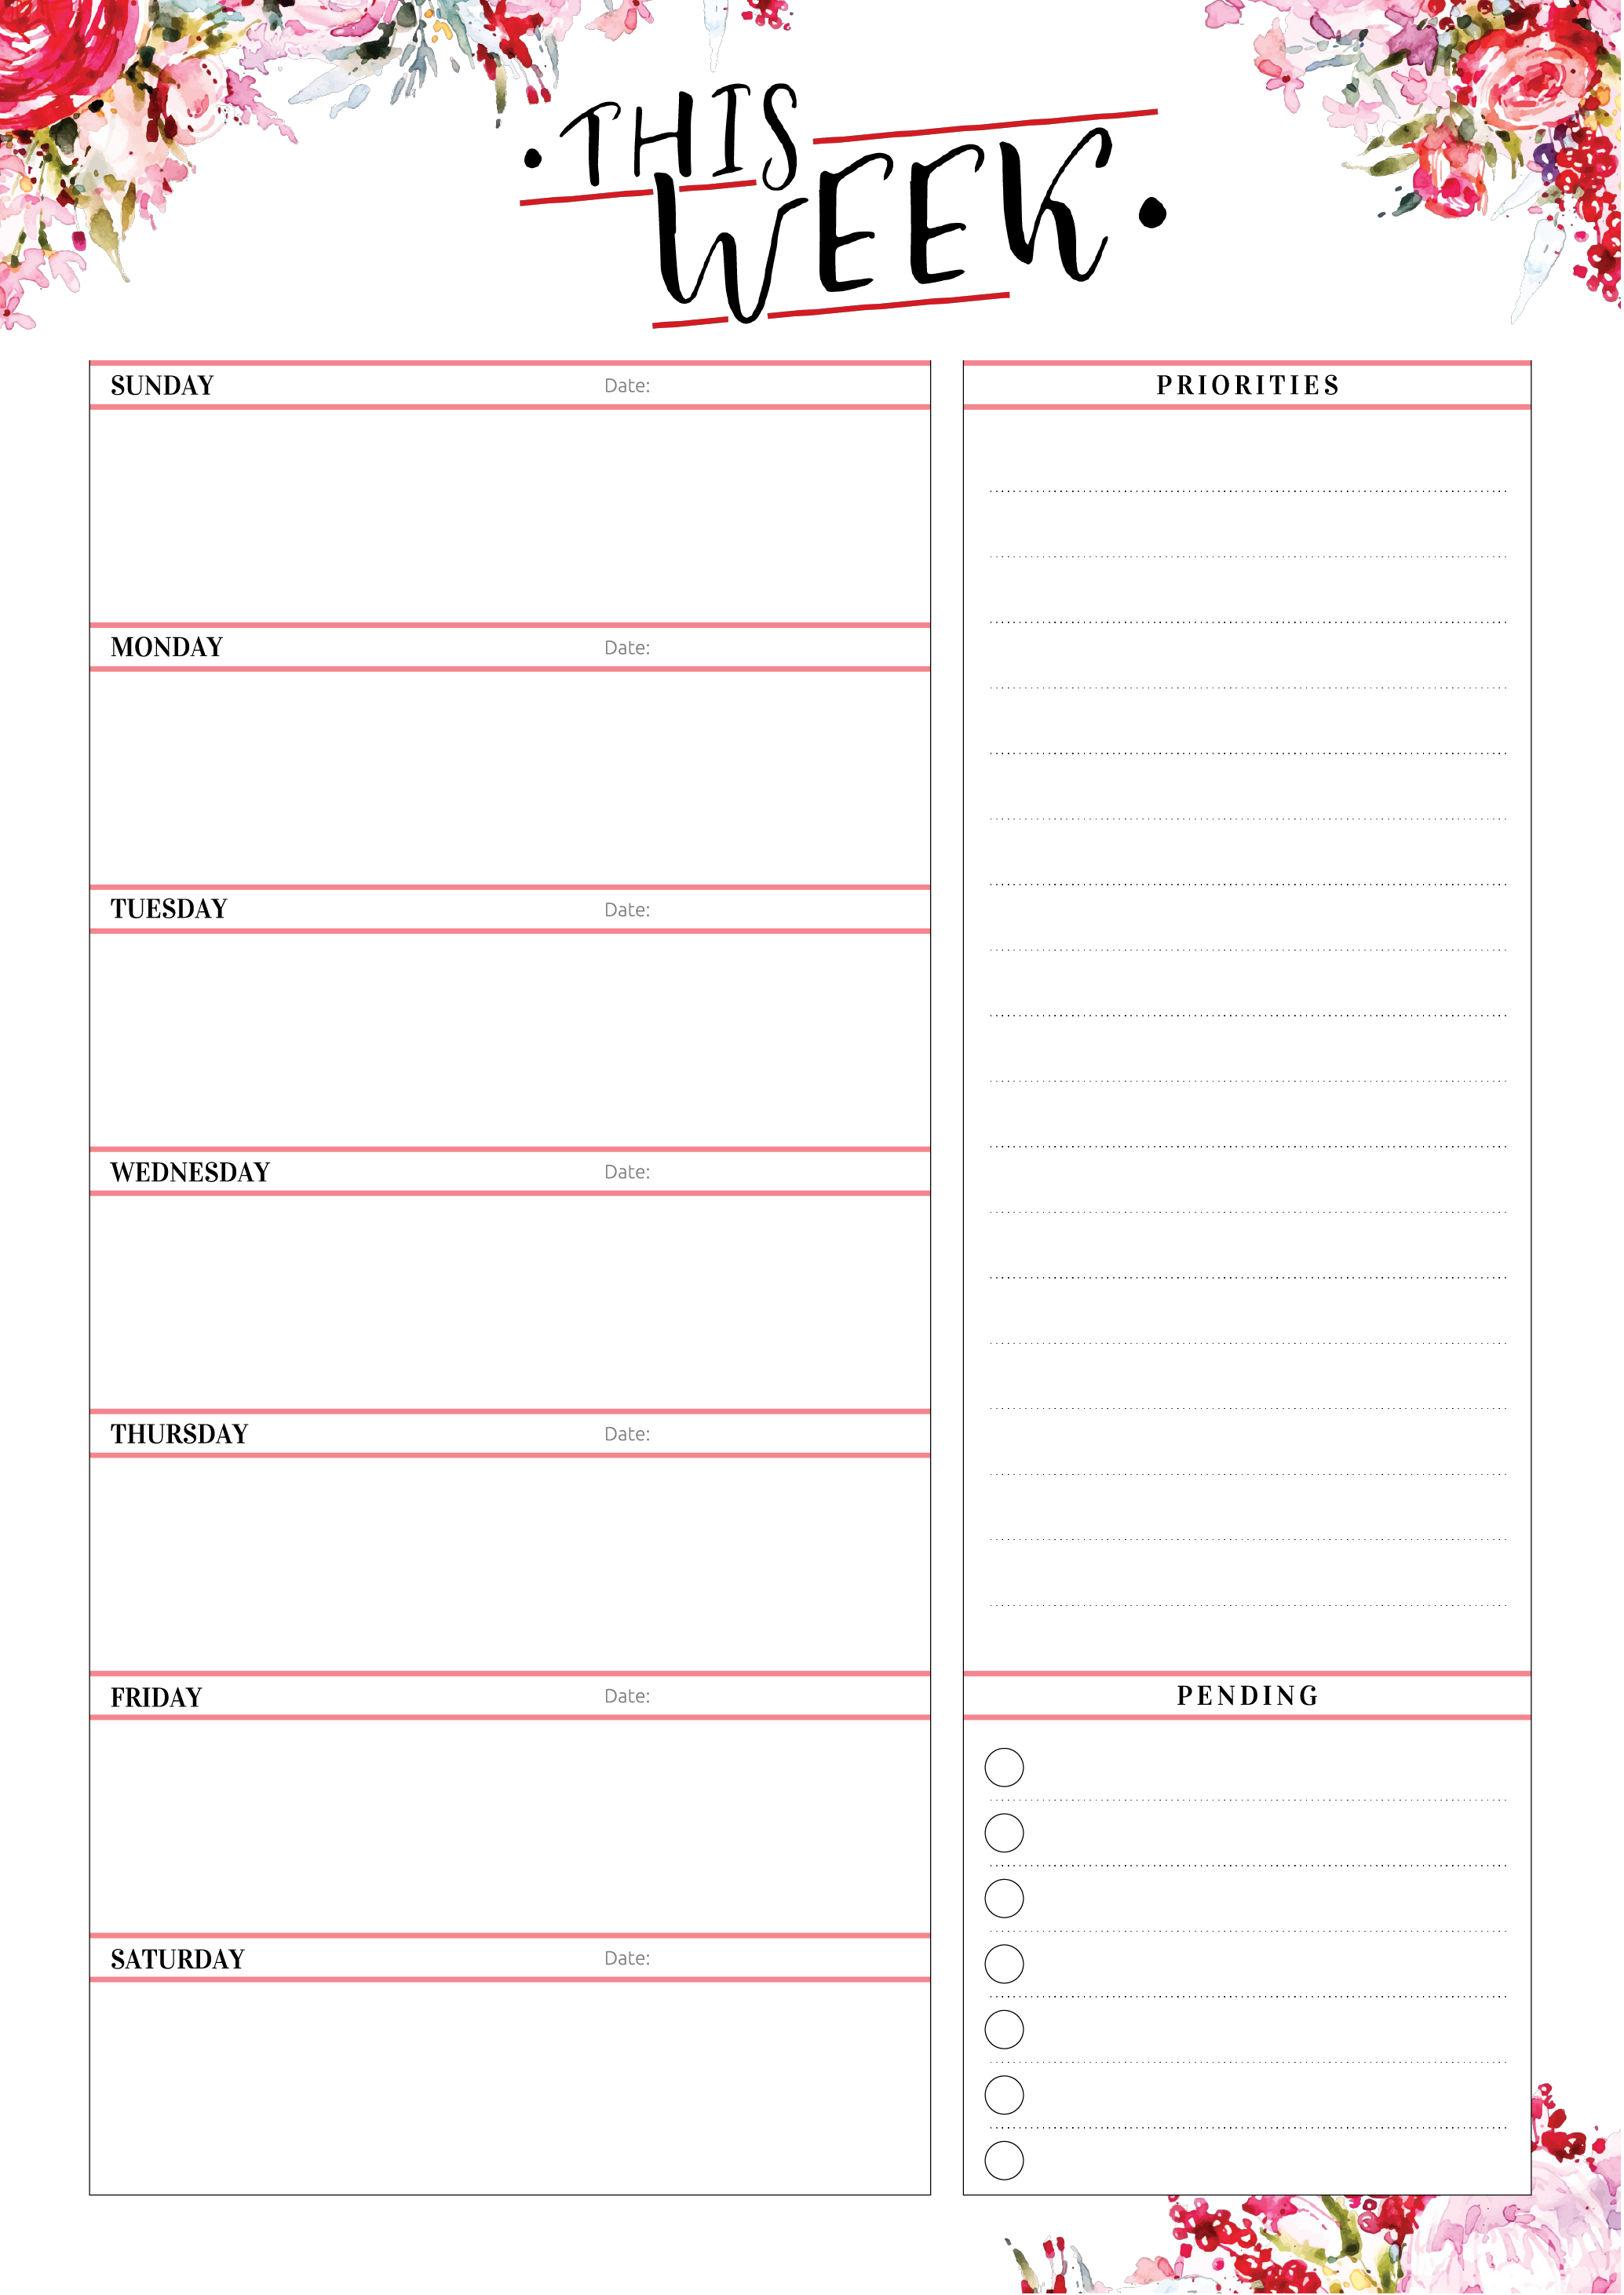 Free Printable Weekly Planner With Priorities Pdf Download Weekly Planner Template Weekly Planner Free Printable Weekly Planner Free